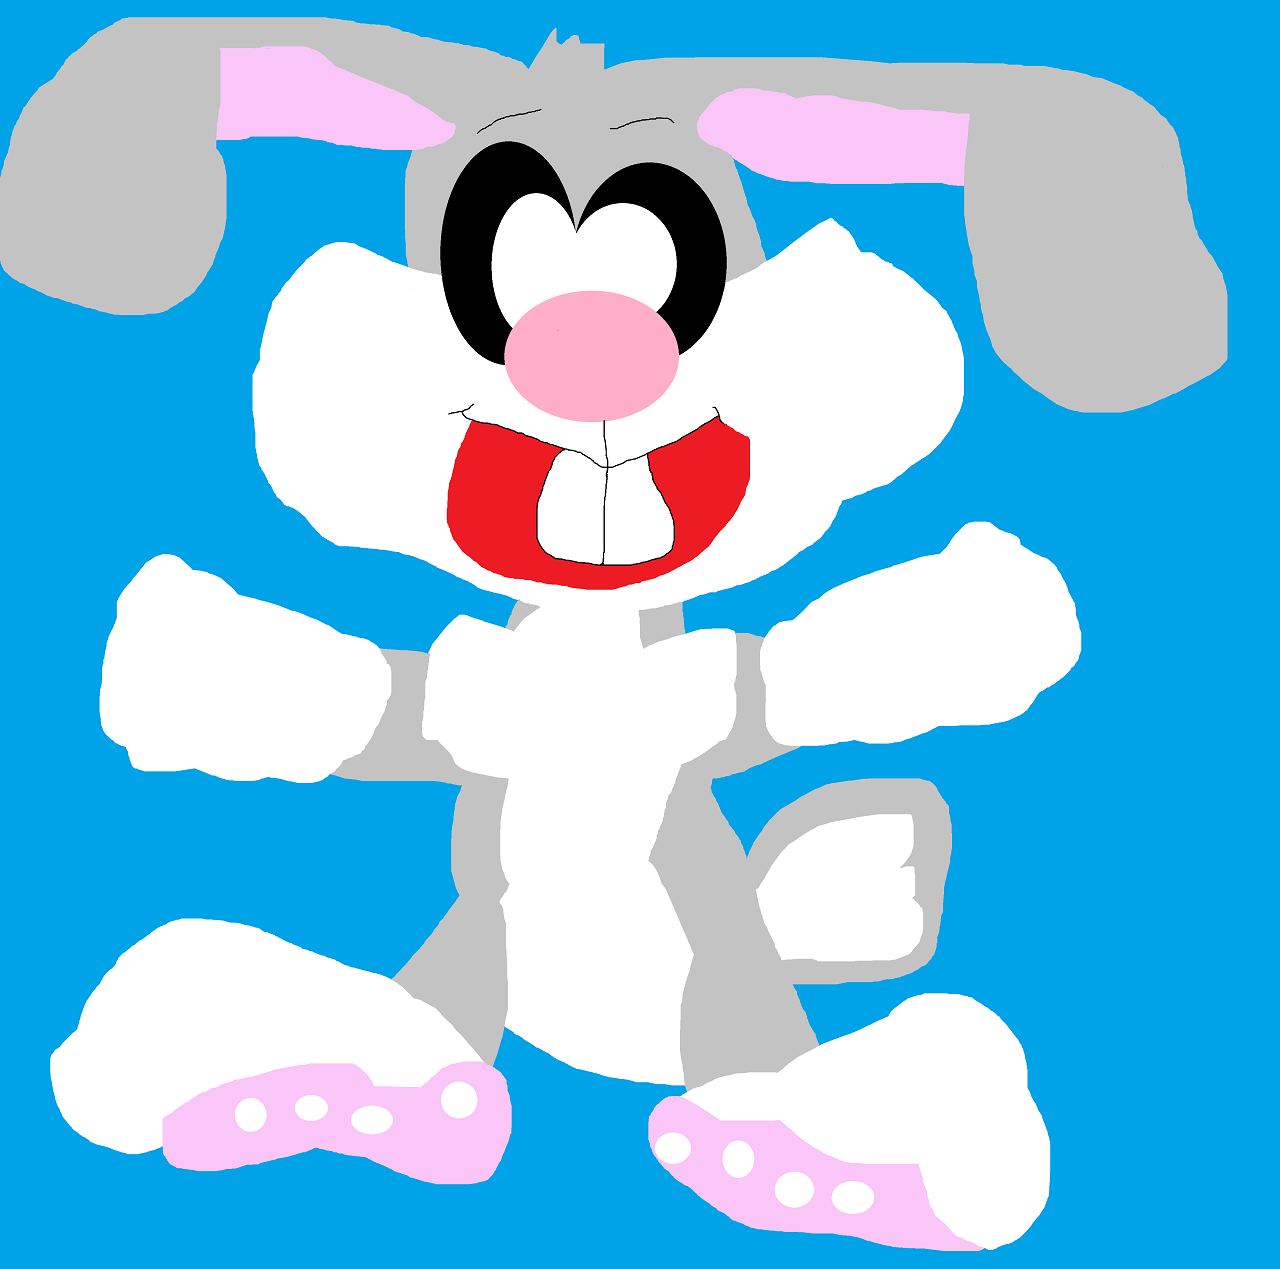 Bugs Bunny Plush For Bugs Bunny Day^^ by Falconlobo